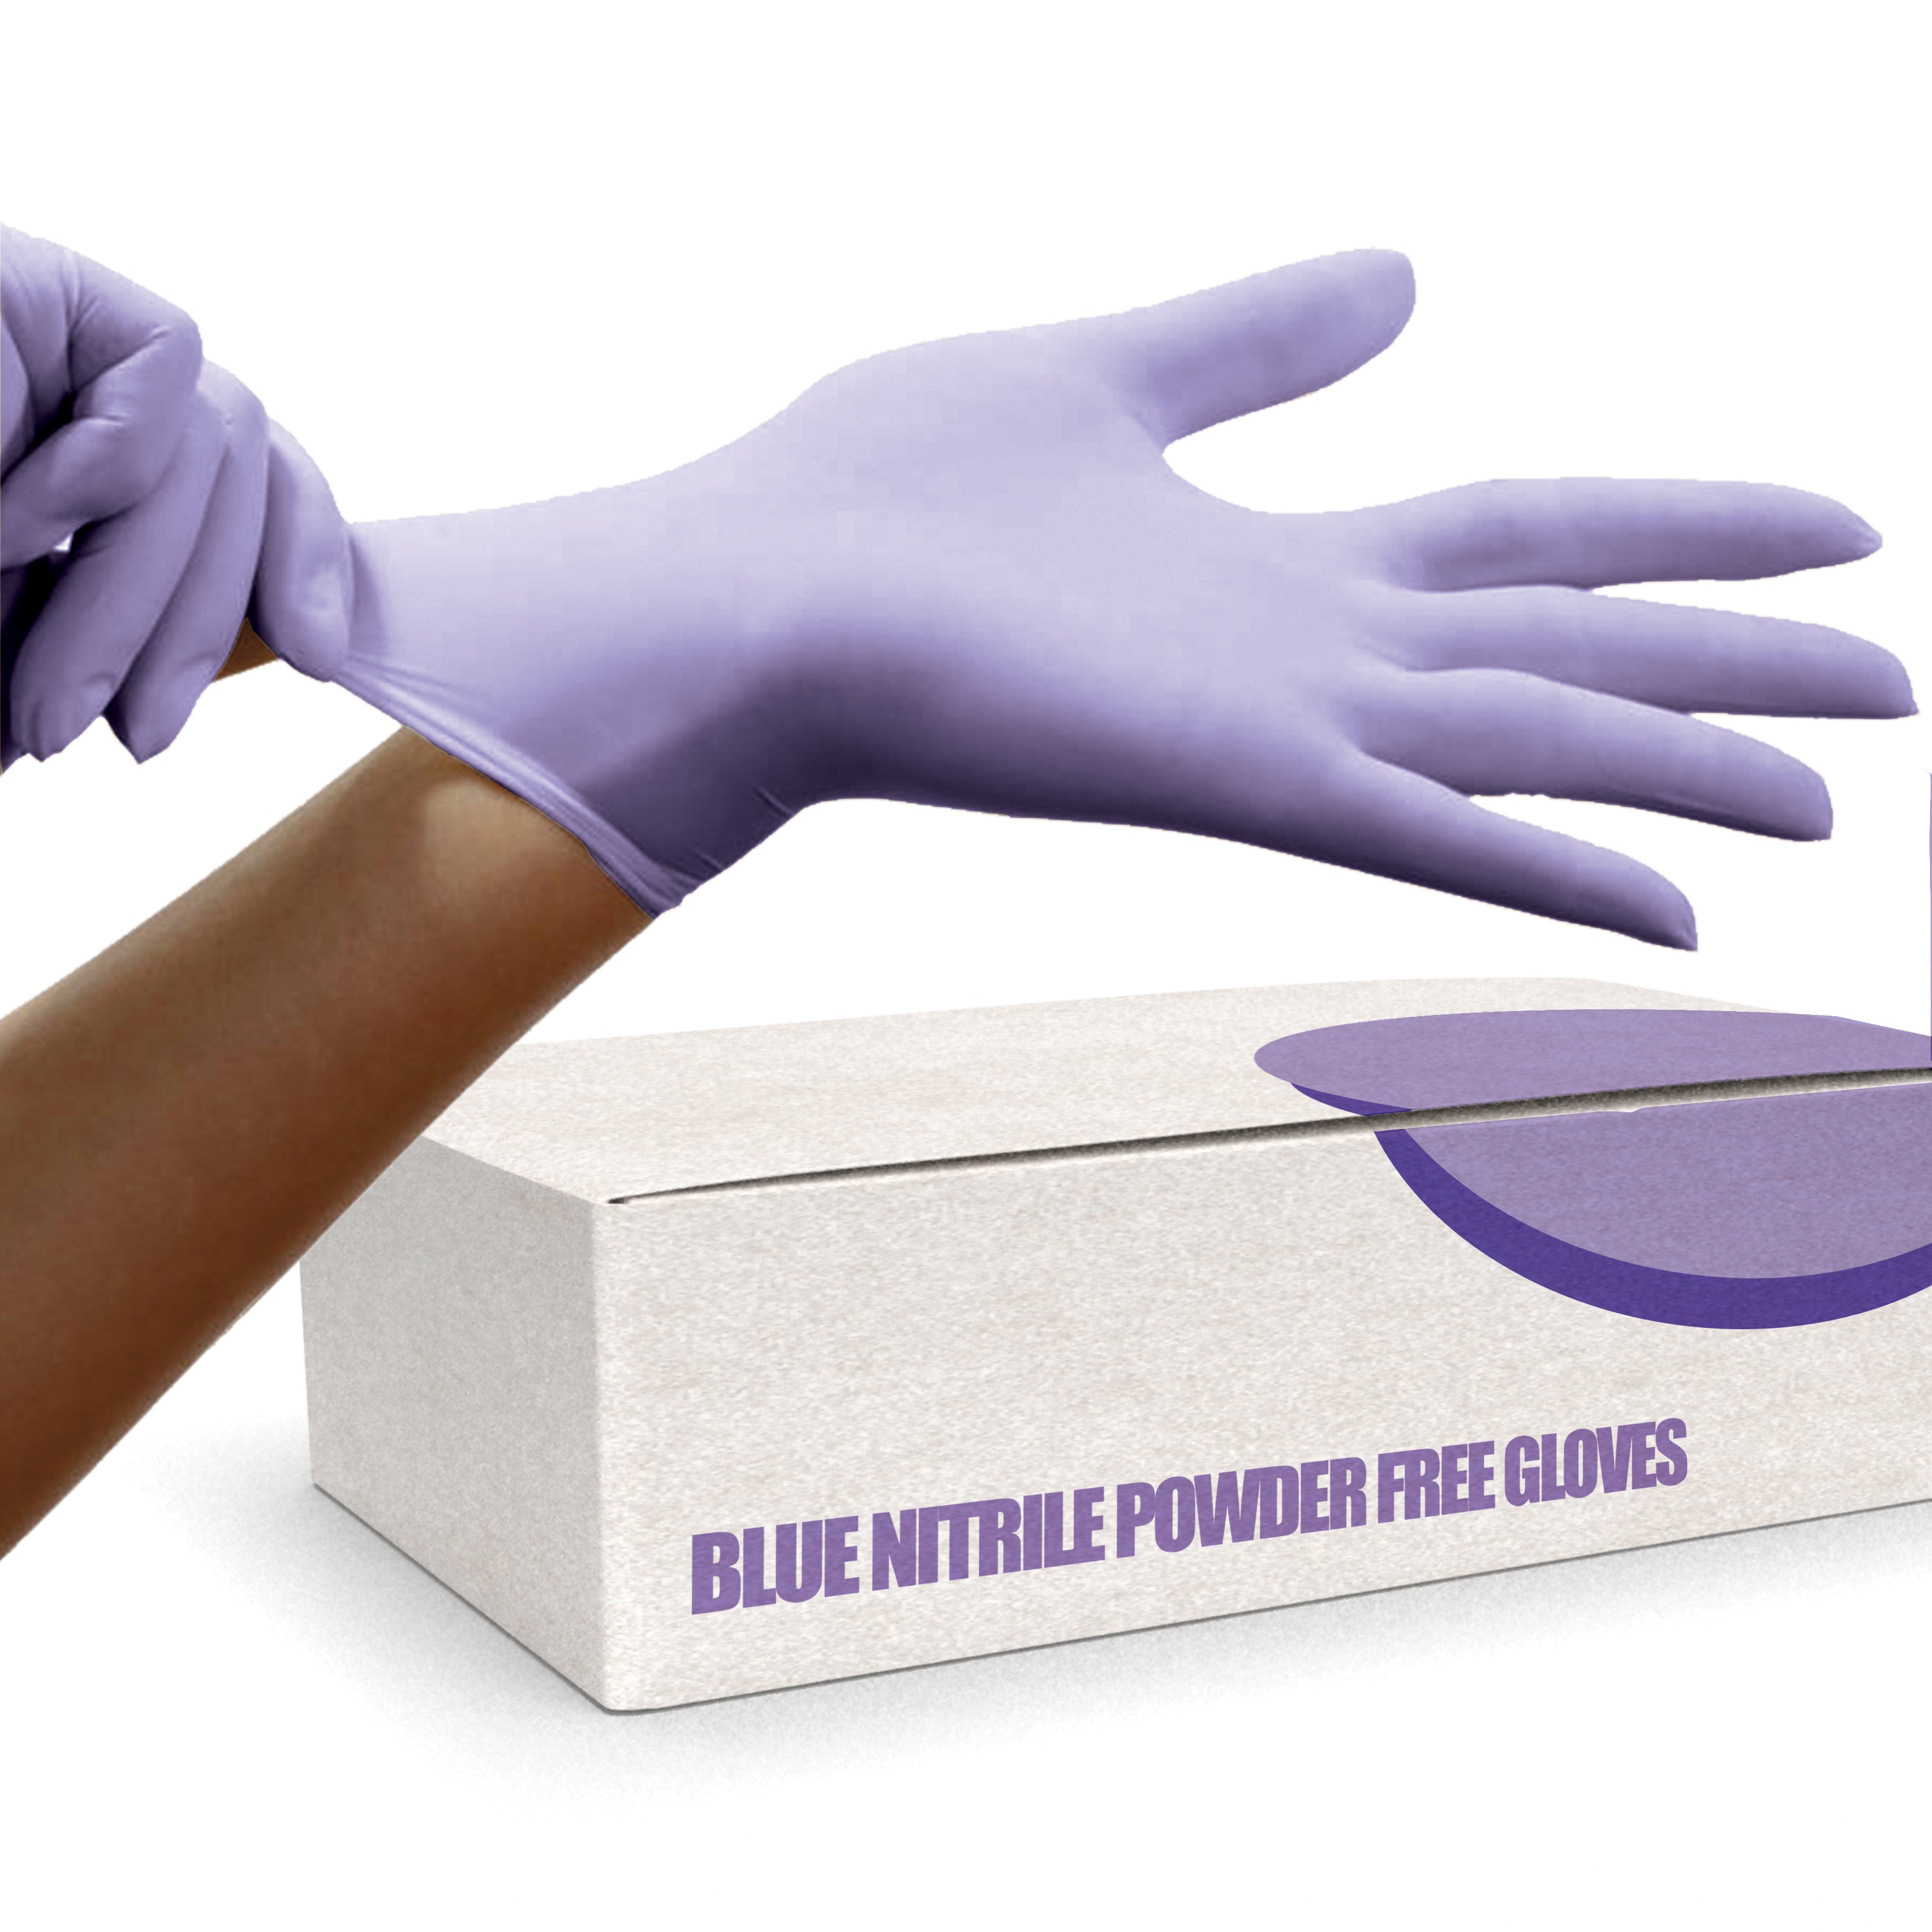 Blue Nitrile High Dexterity Powder Free Gloves, 3 mil